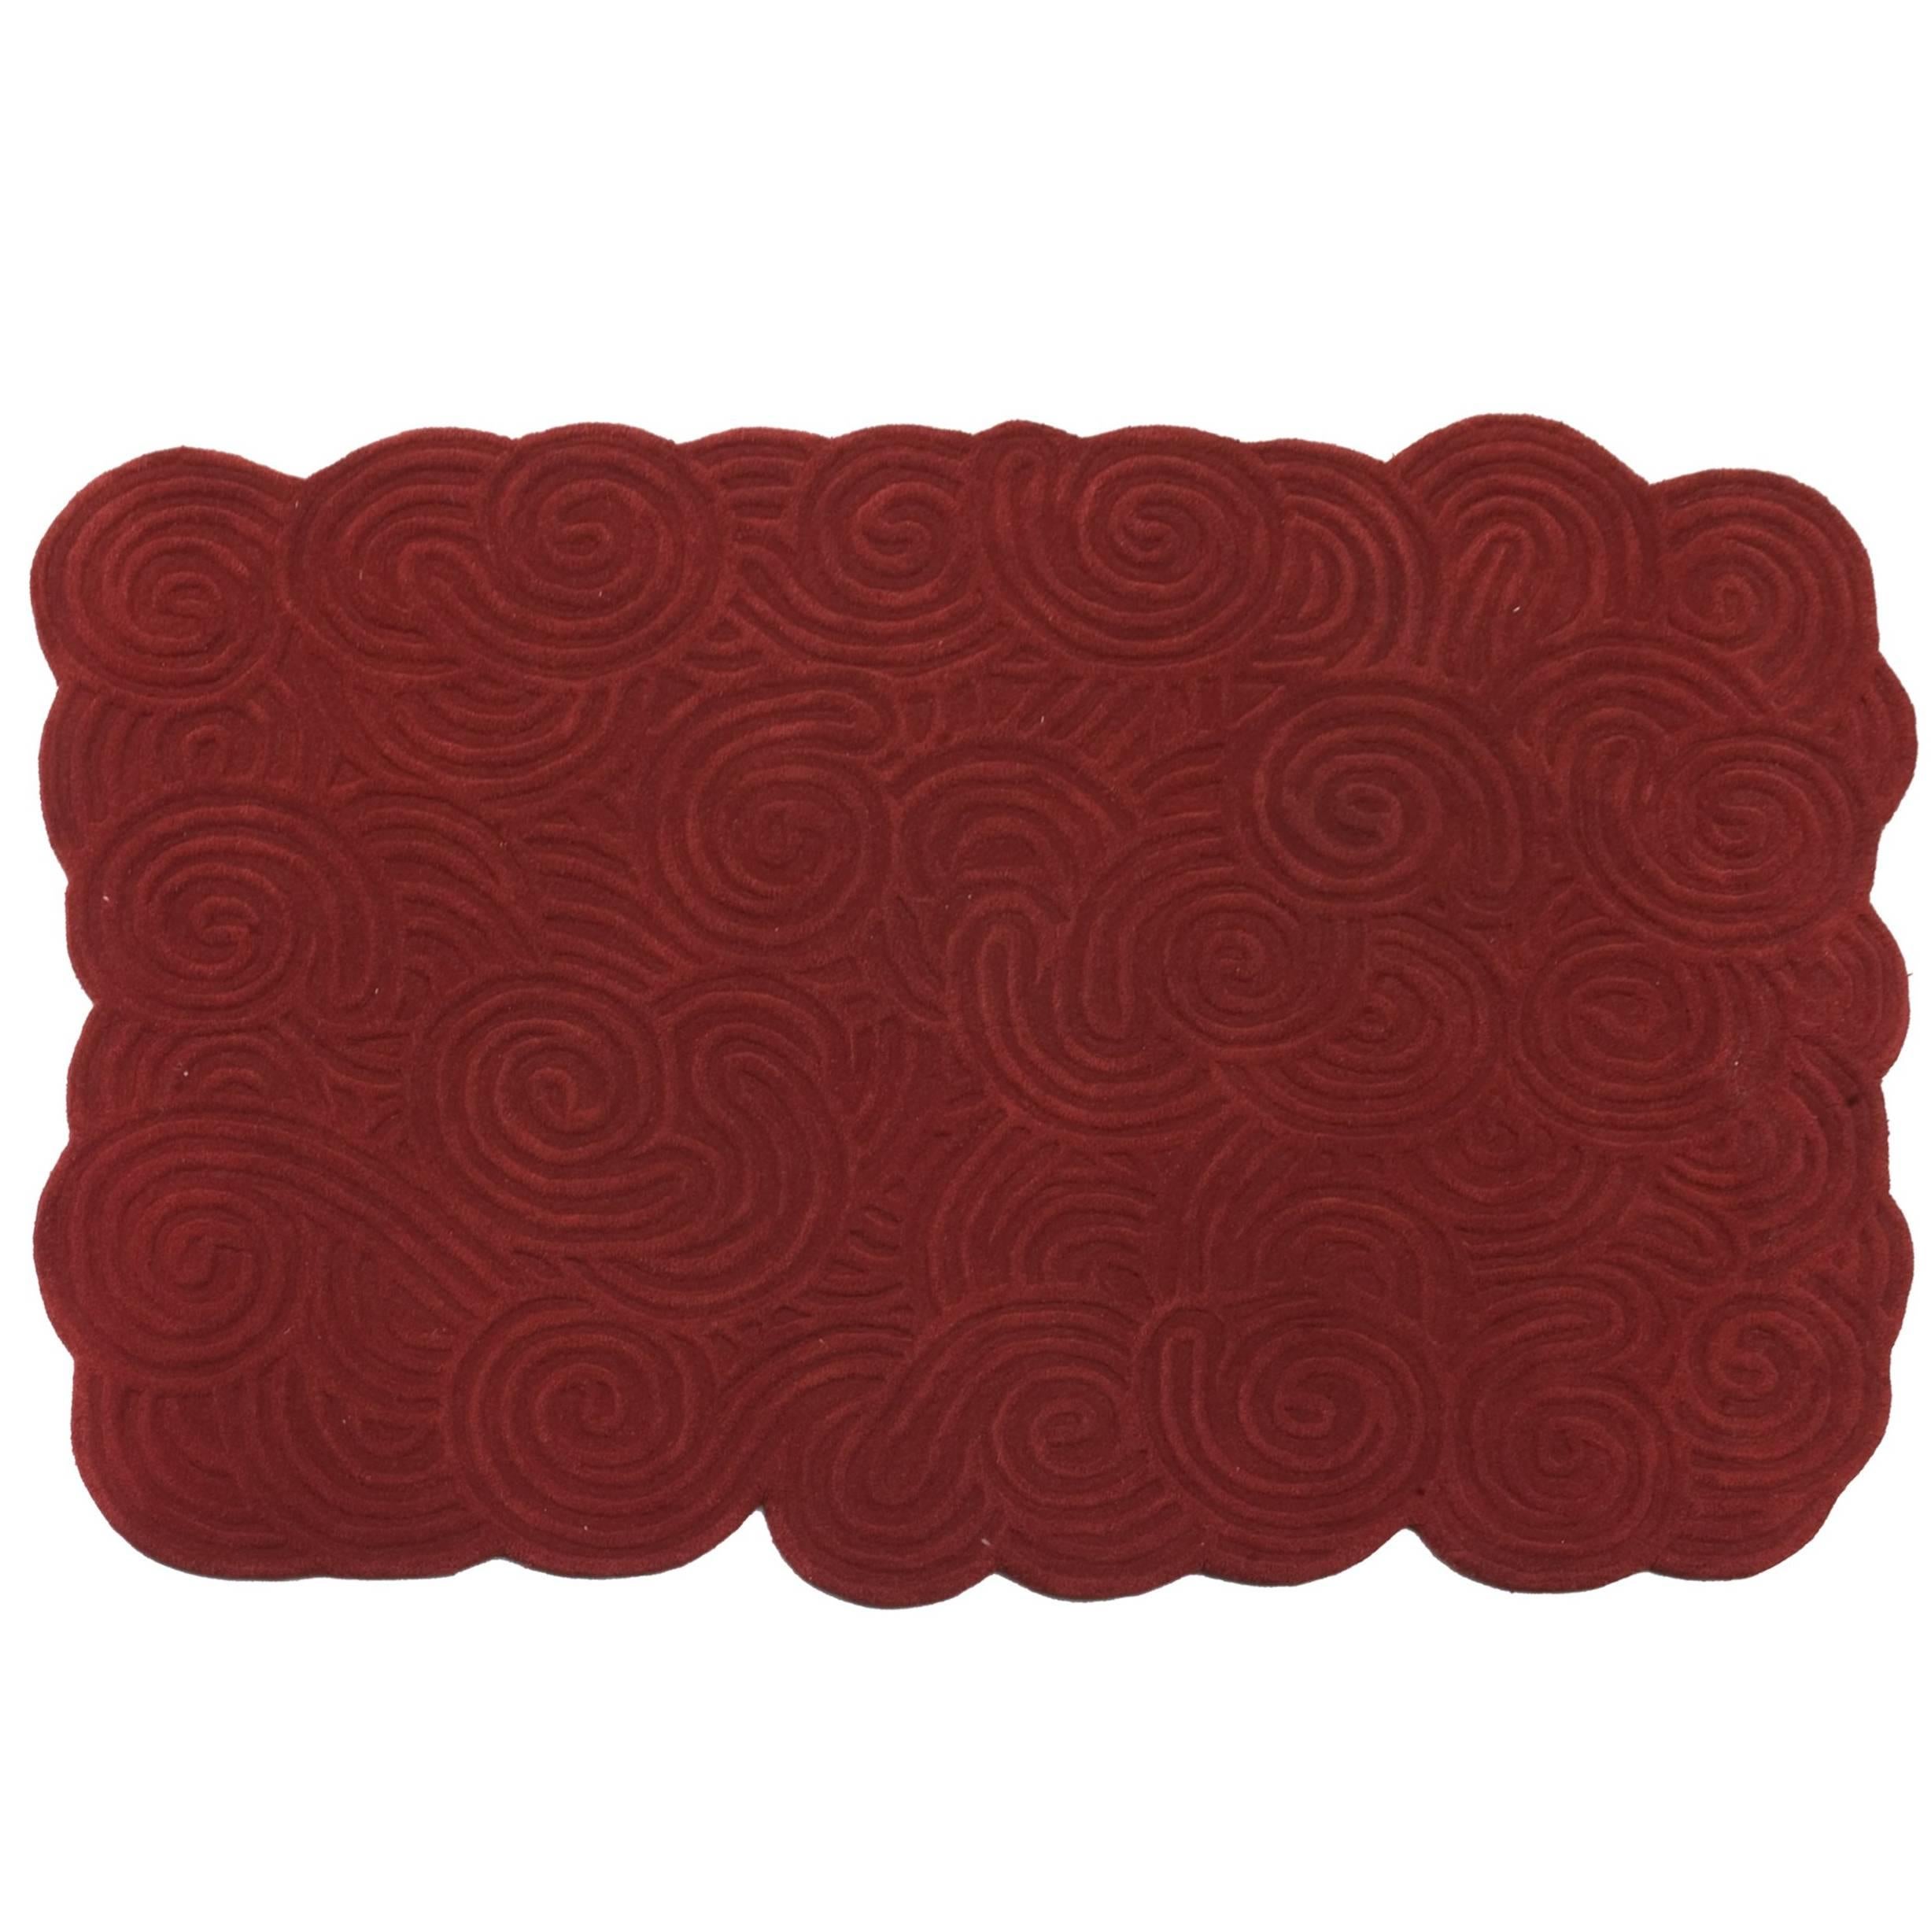 Karesansui Rectangular Wool Rug in Berry (Red) by Matteo Cibic for Scarlet Splen For Sale